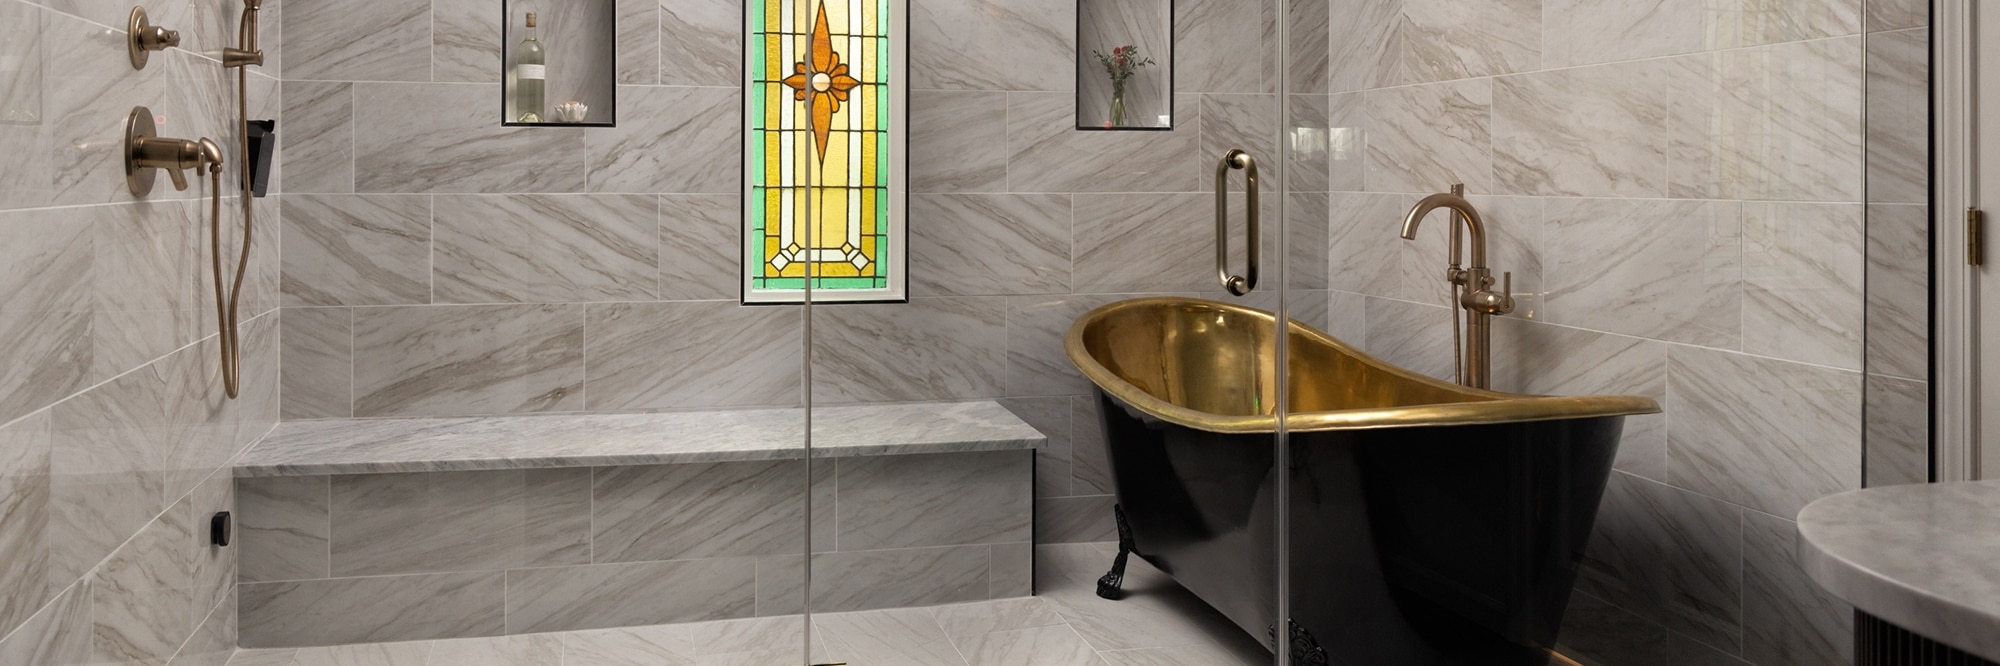 Simple Bathroom Designs to Refresh Your Space  Daltile